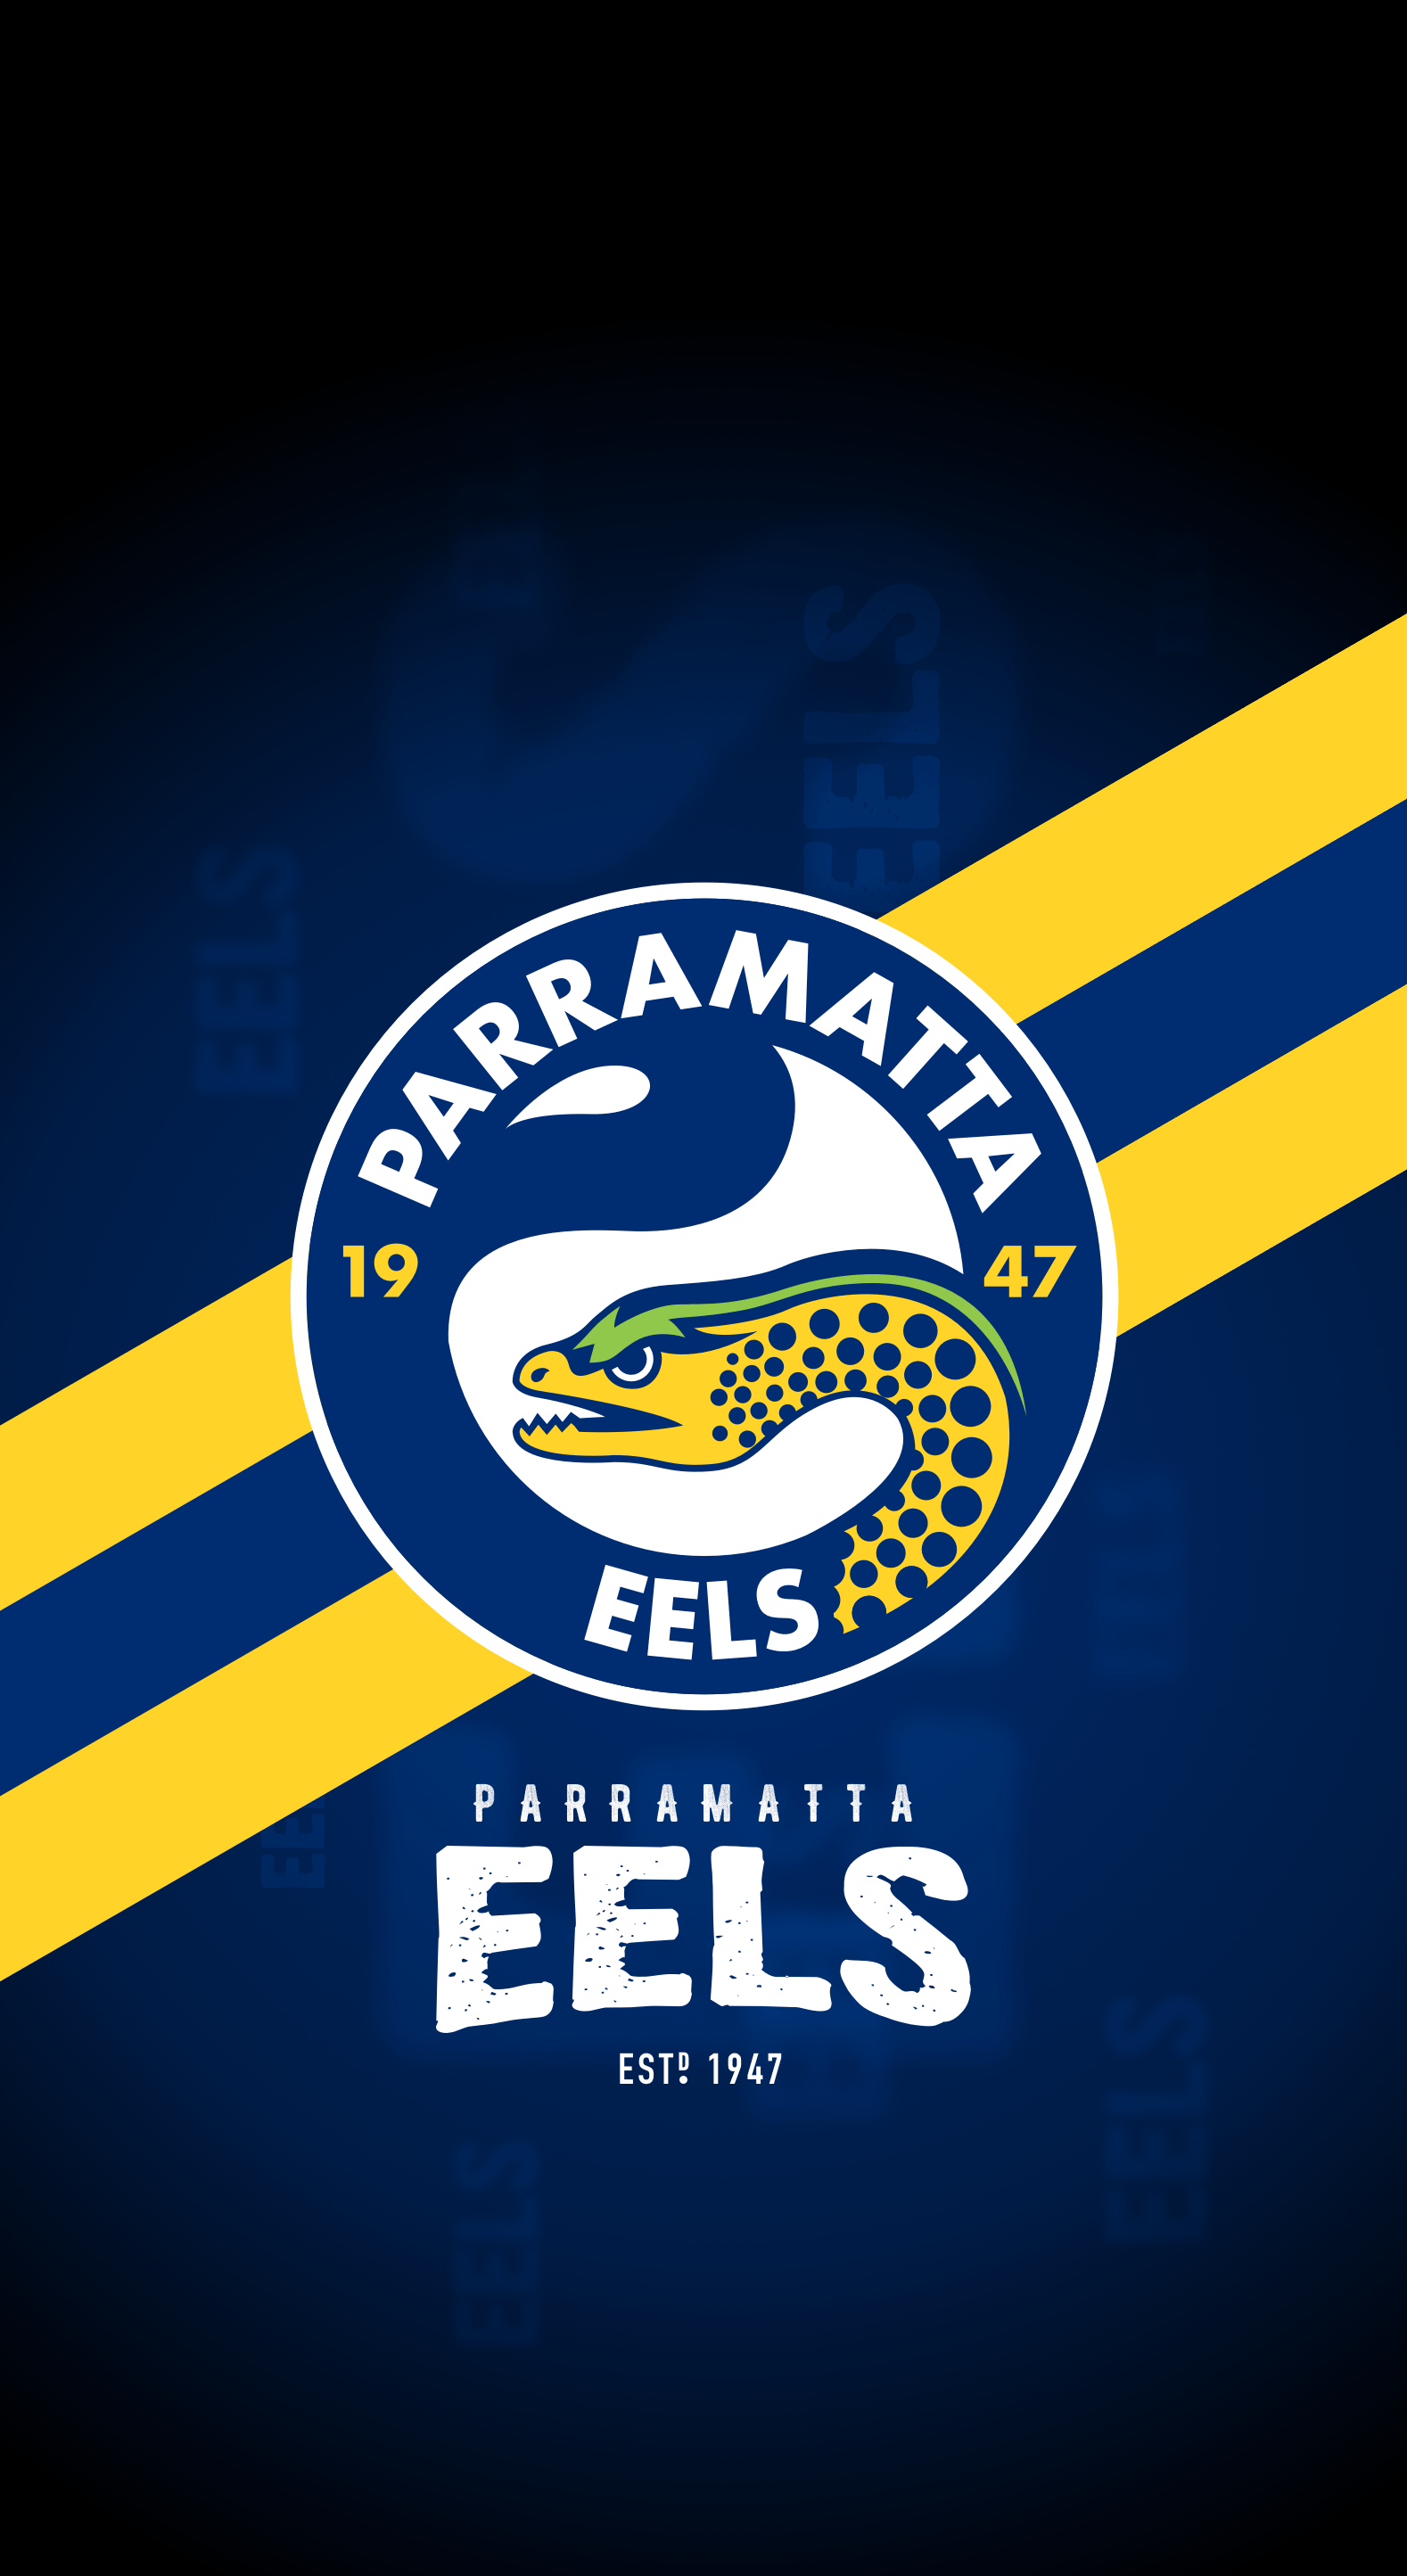 All sizes. Parramatta Eels iPhone X Lock Screen Wallpaper